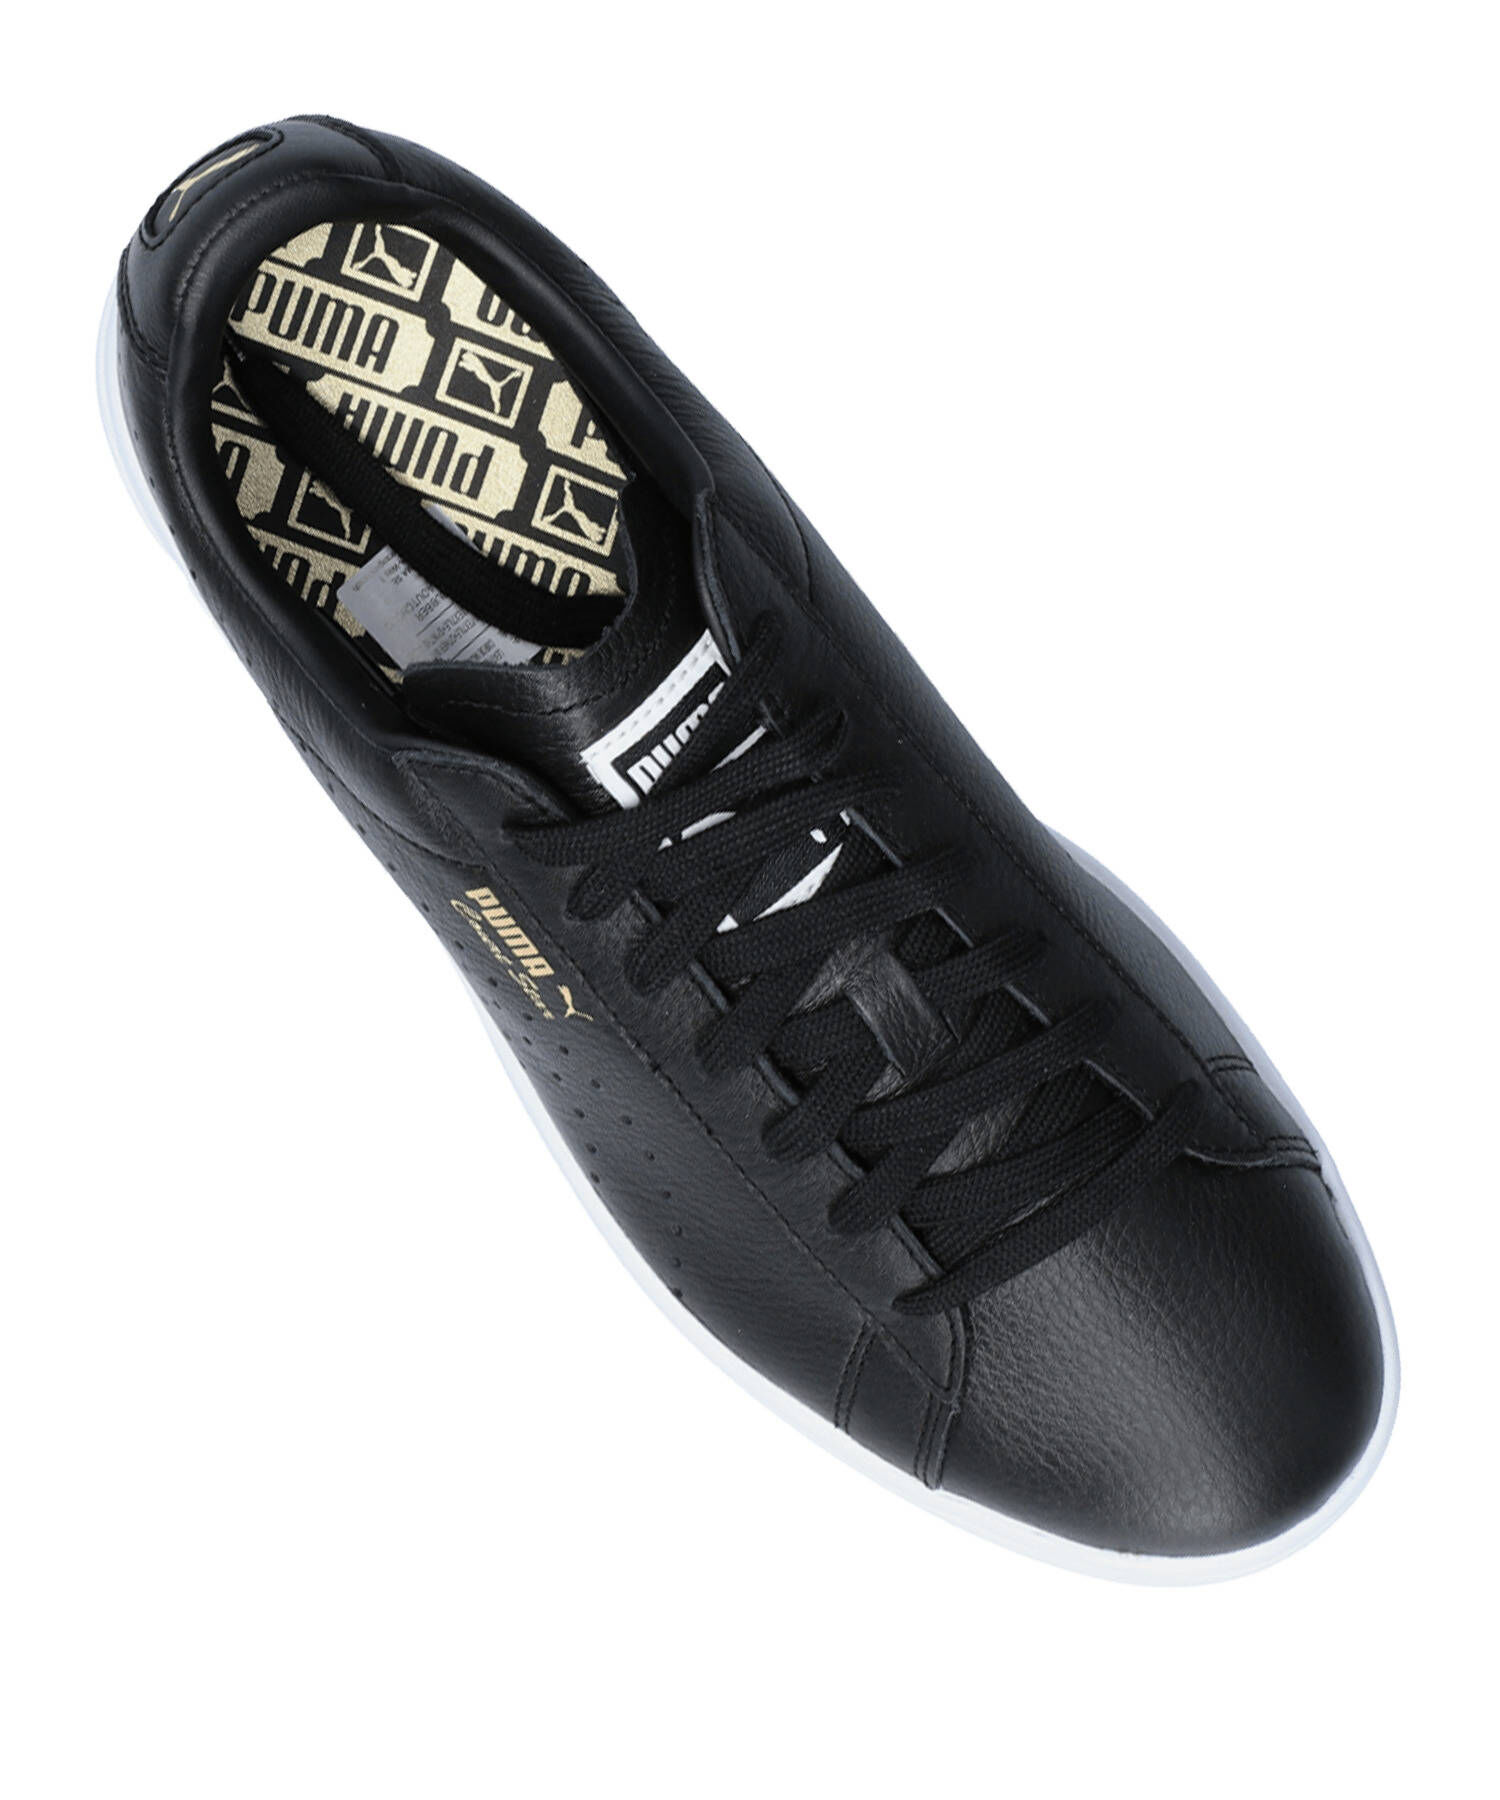 Puma Herren Schuhe - Herren Sneakers Star kaufen Sneaker - engelhorn Lifestyle | Court NM